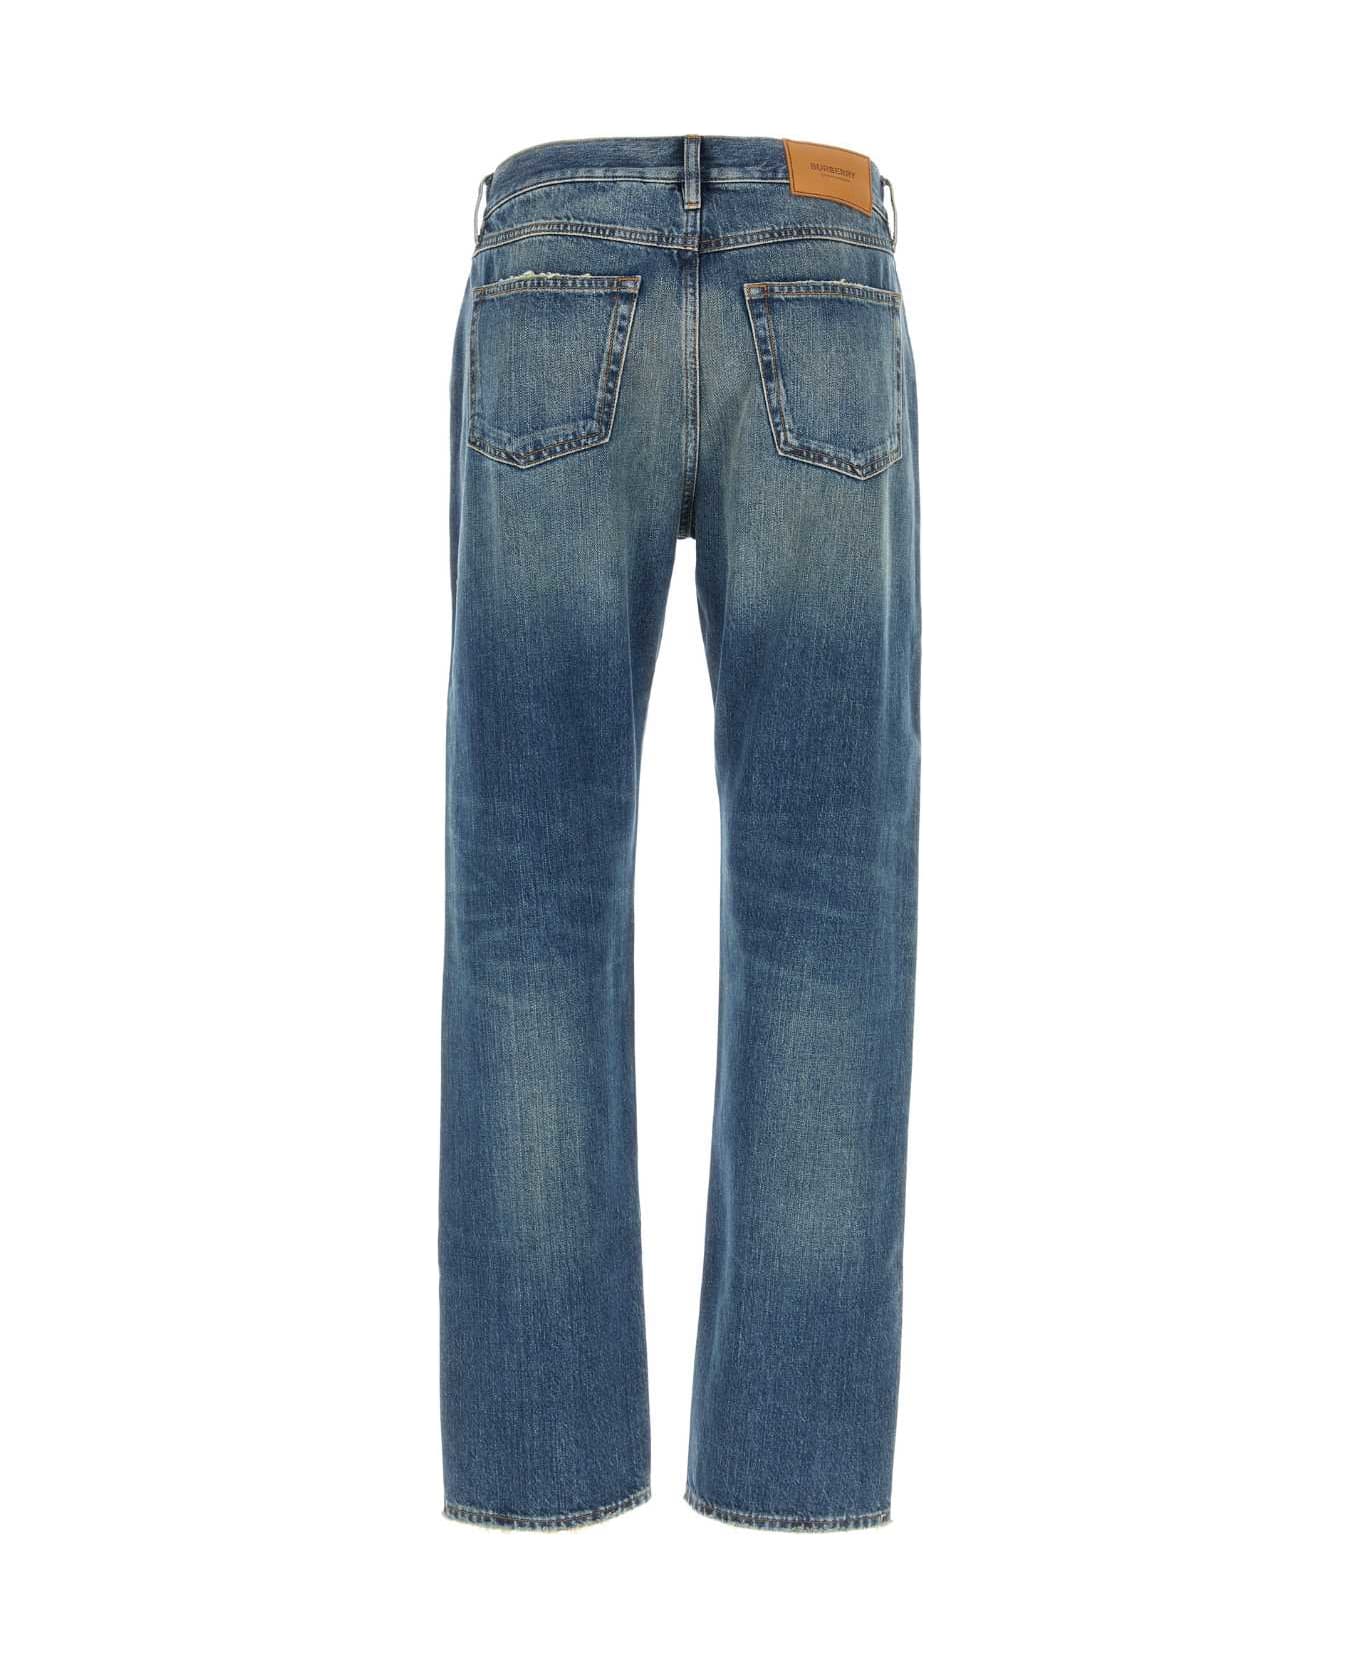 Burberry Denim Jeans - VINTAGEDENIM